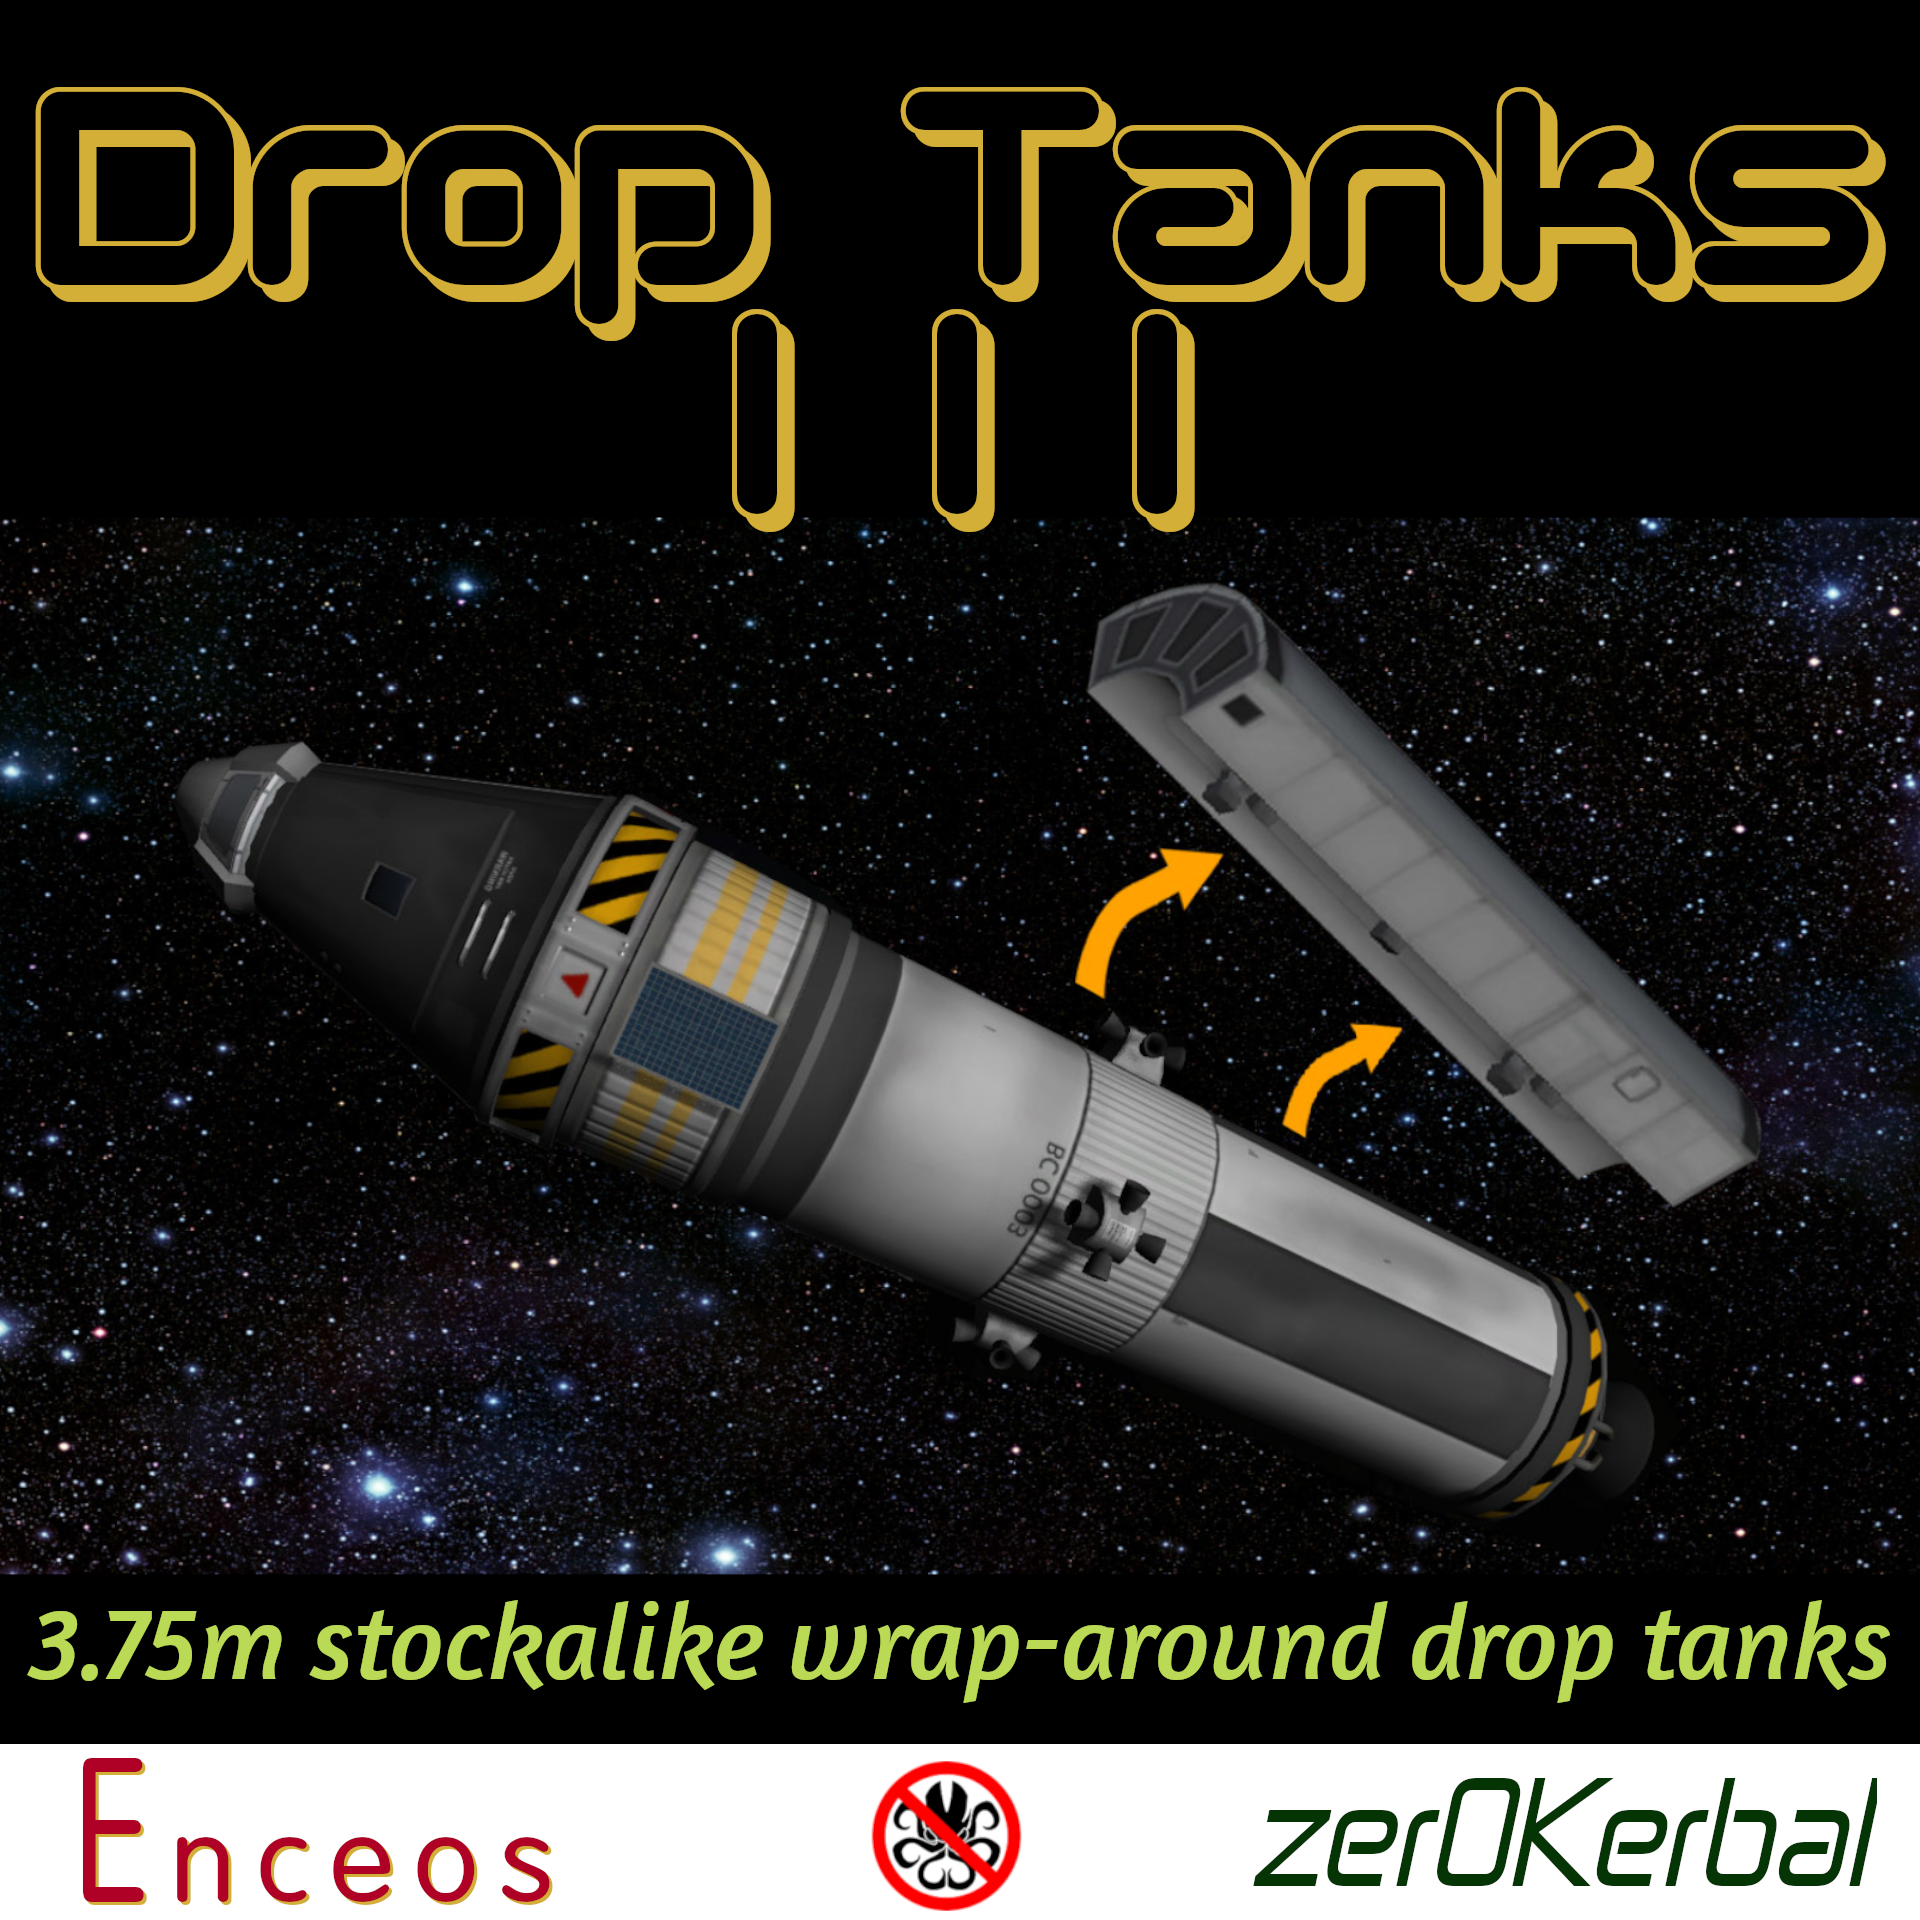 Drop Tanks III (DTIII) project avatar